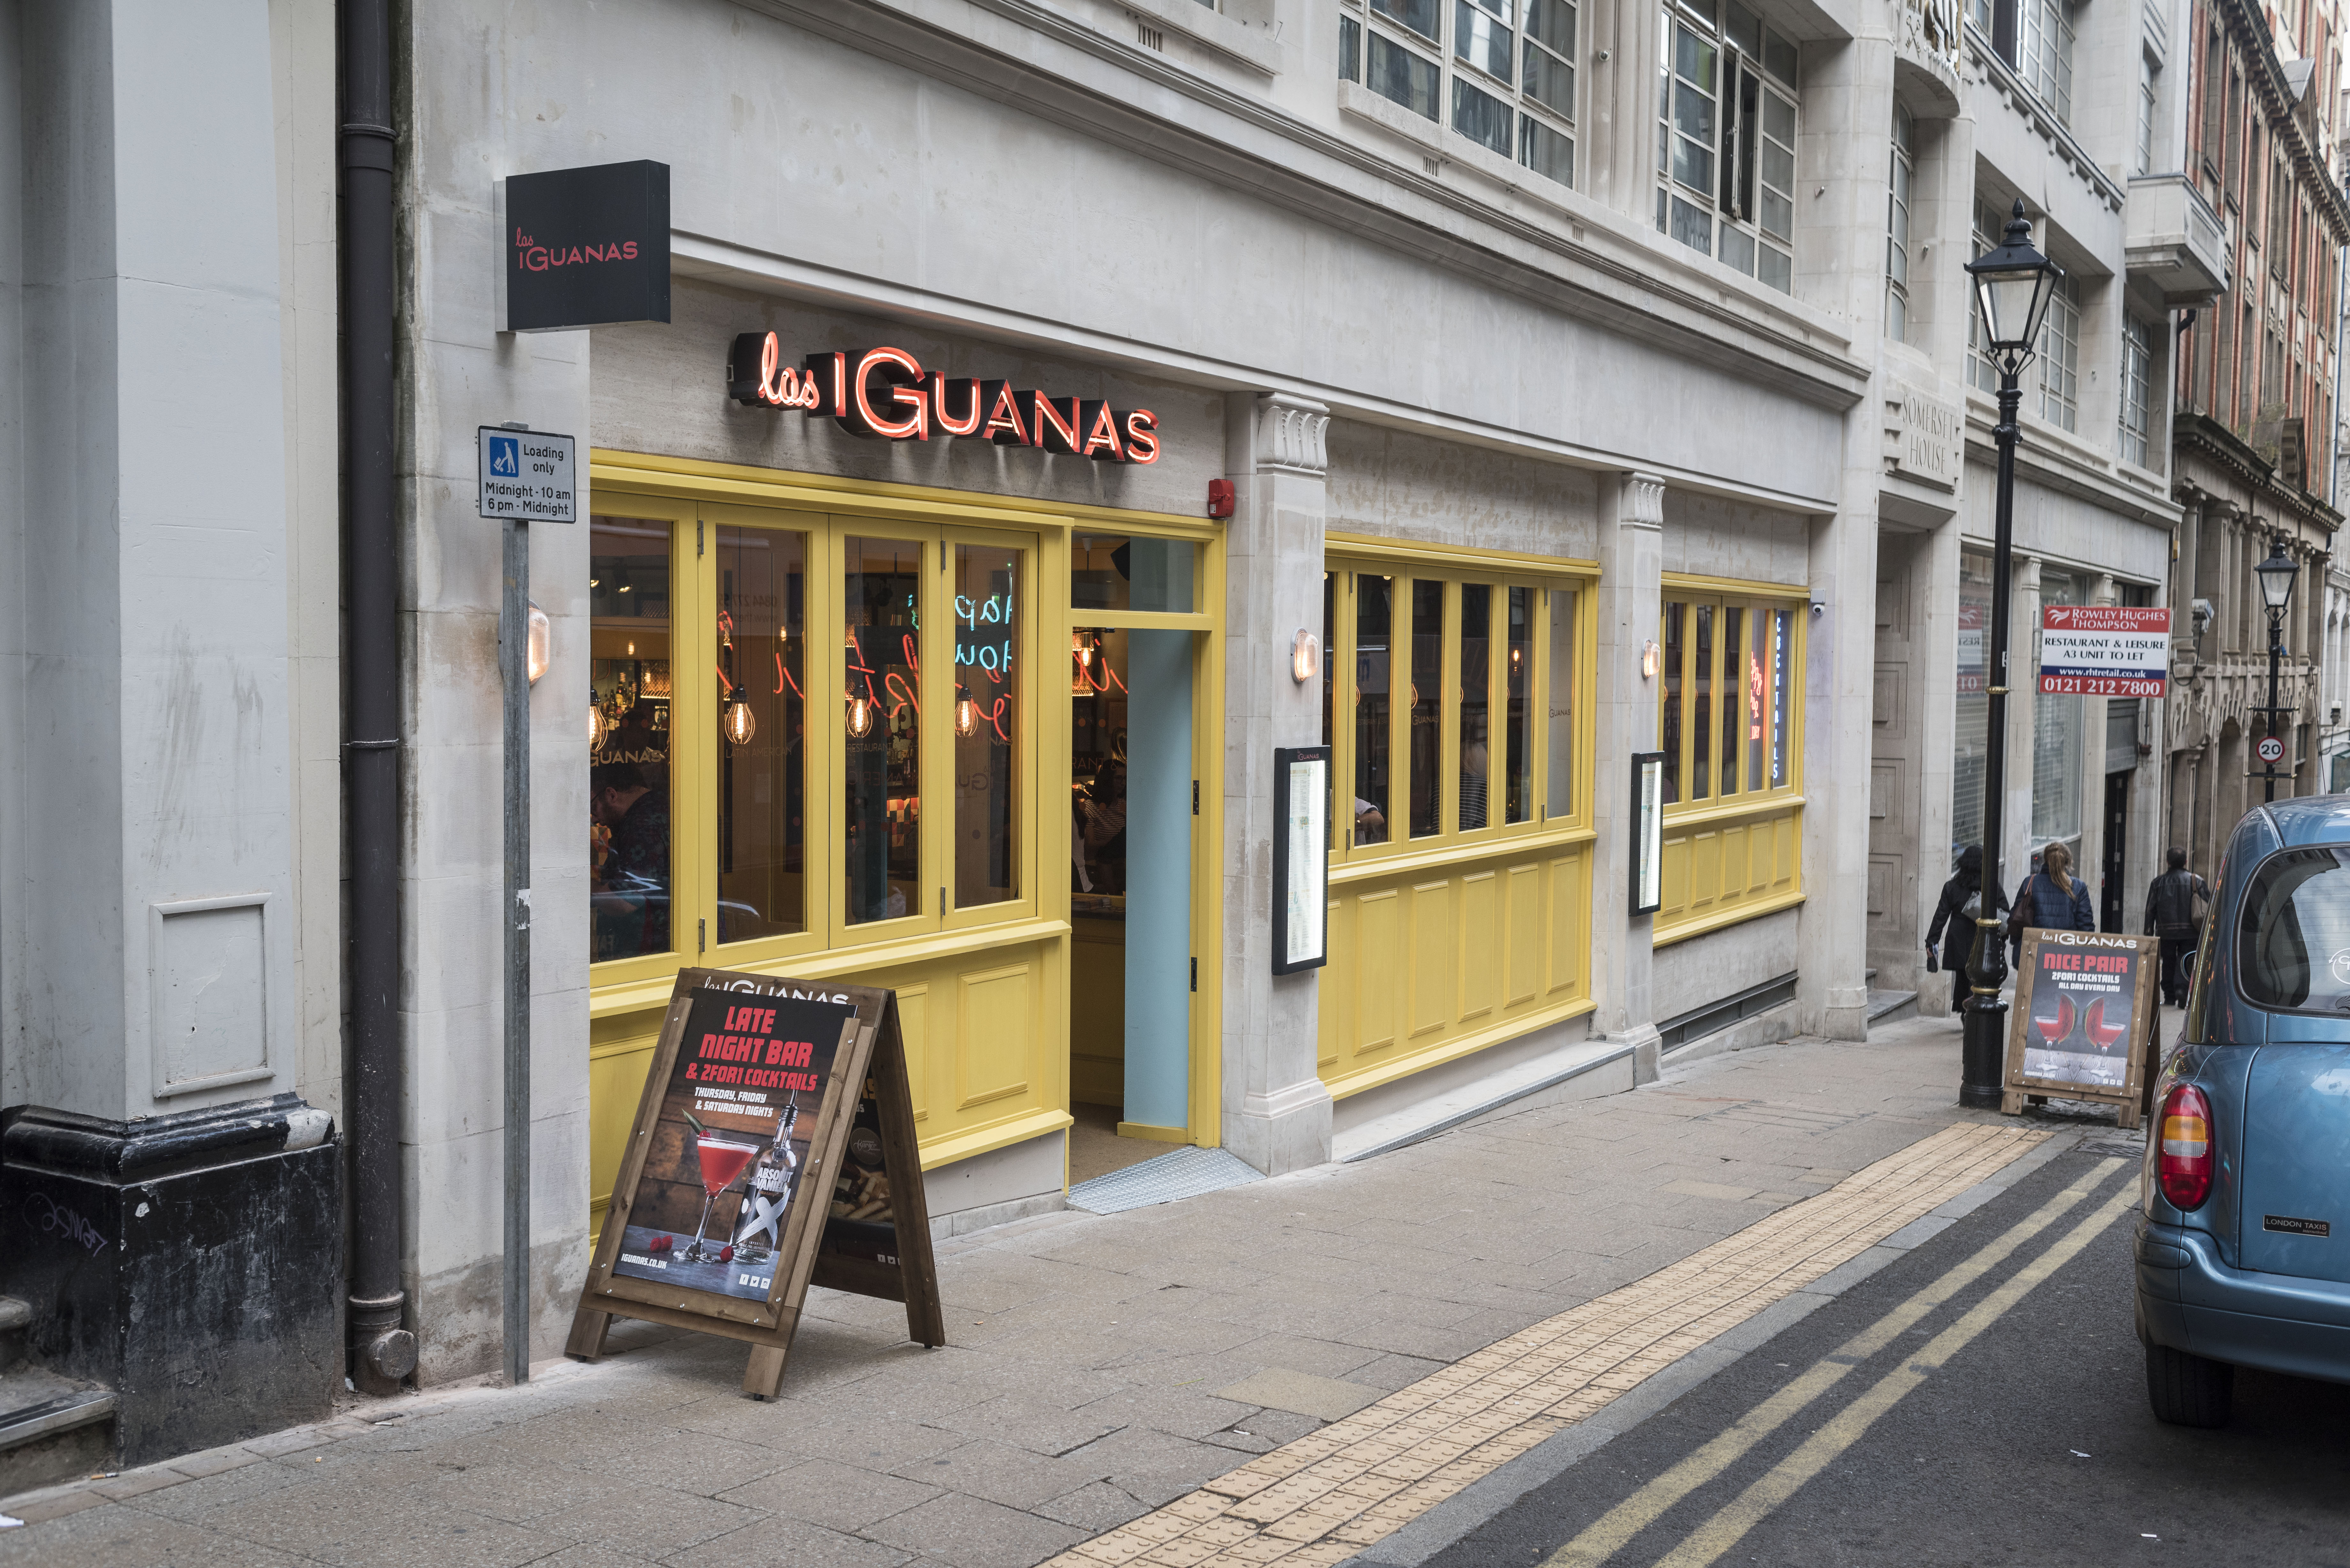 Las Iguanas opens at Temple Street, Birmingham.